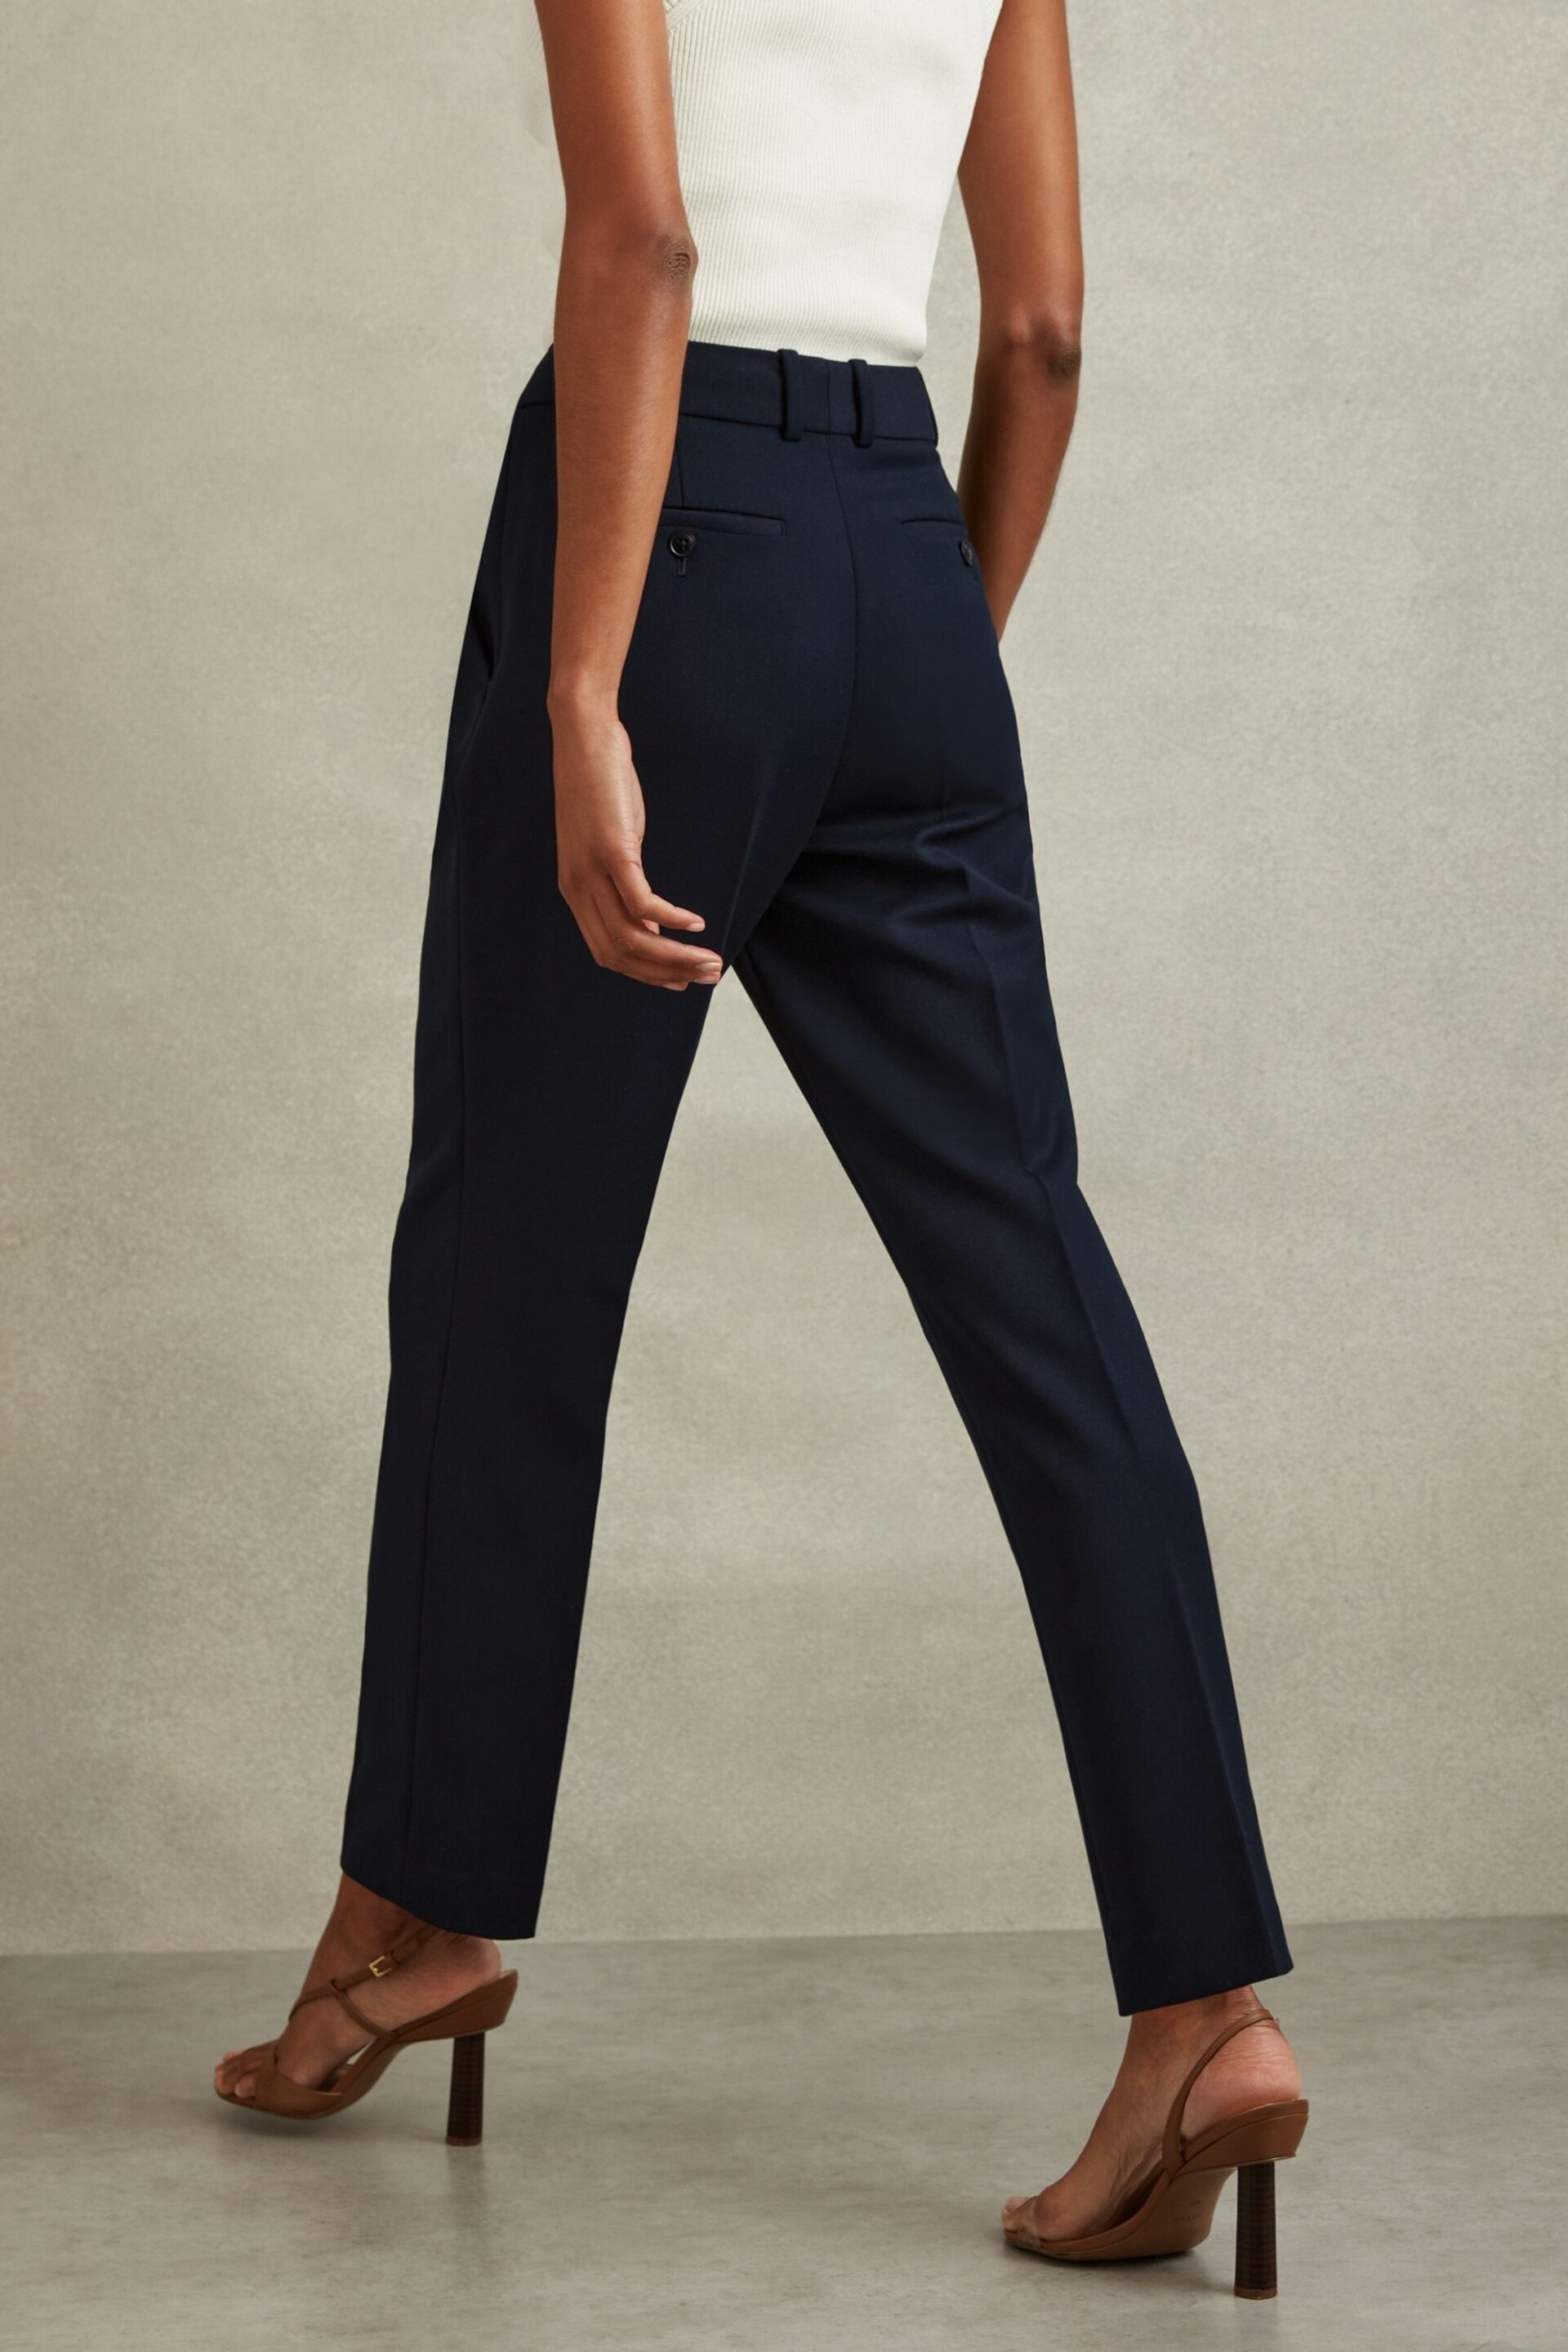 Reiss Navy Gabi Petite Slim Fit Suit Trousers - Image 5 of 7